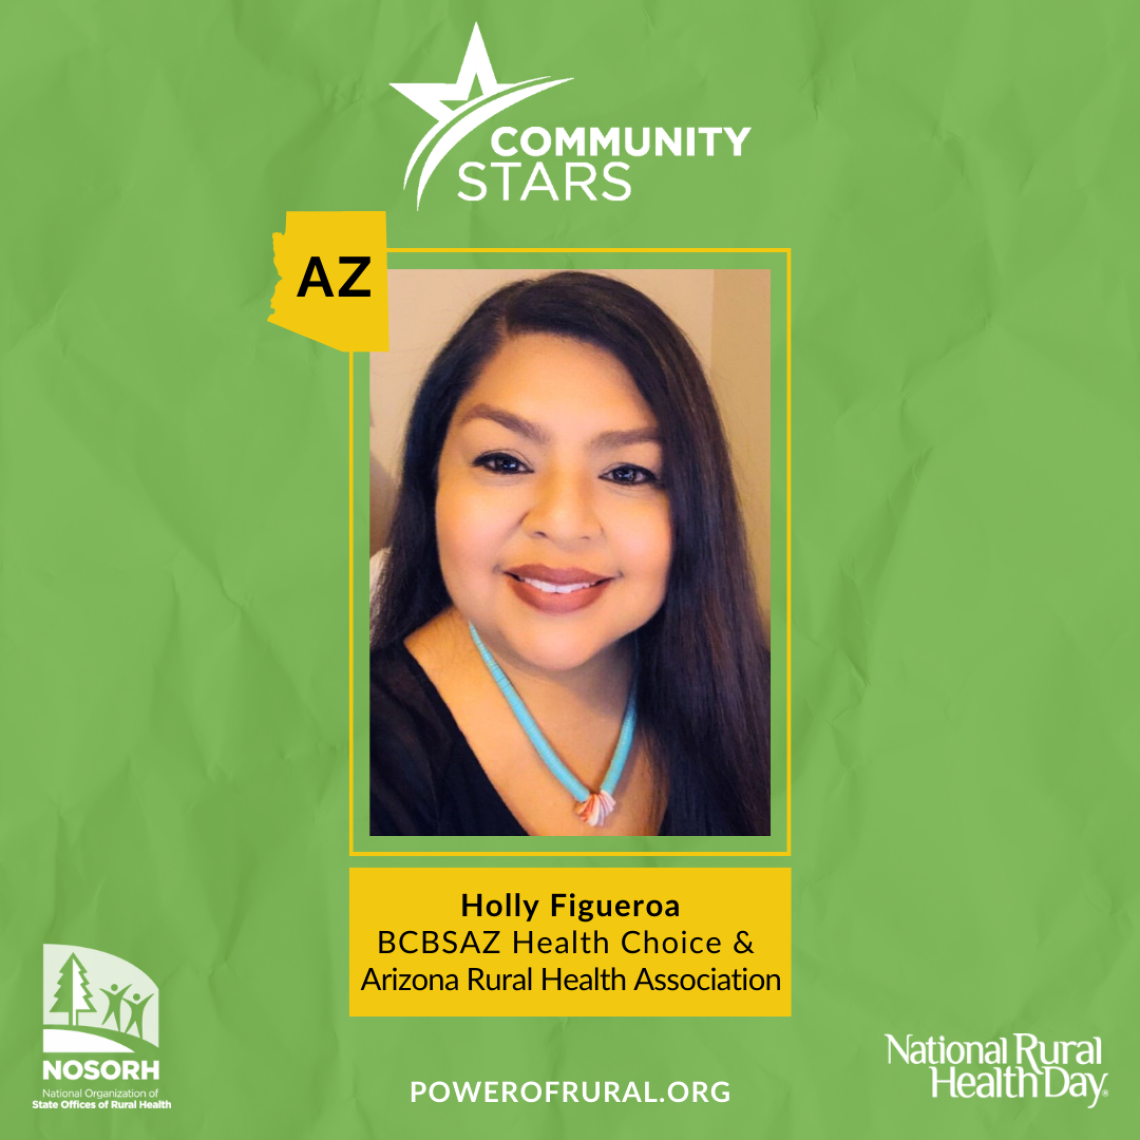 Community Star Holly Figueroa